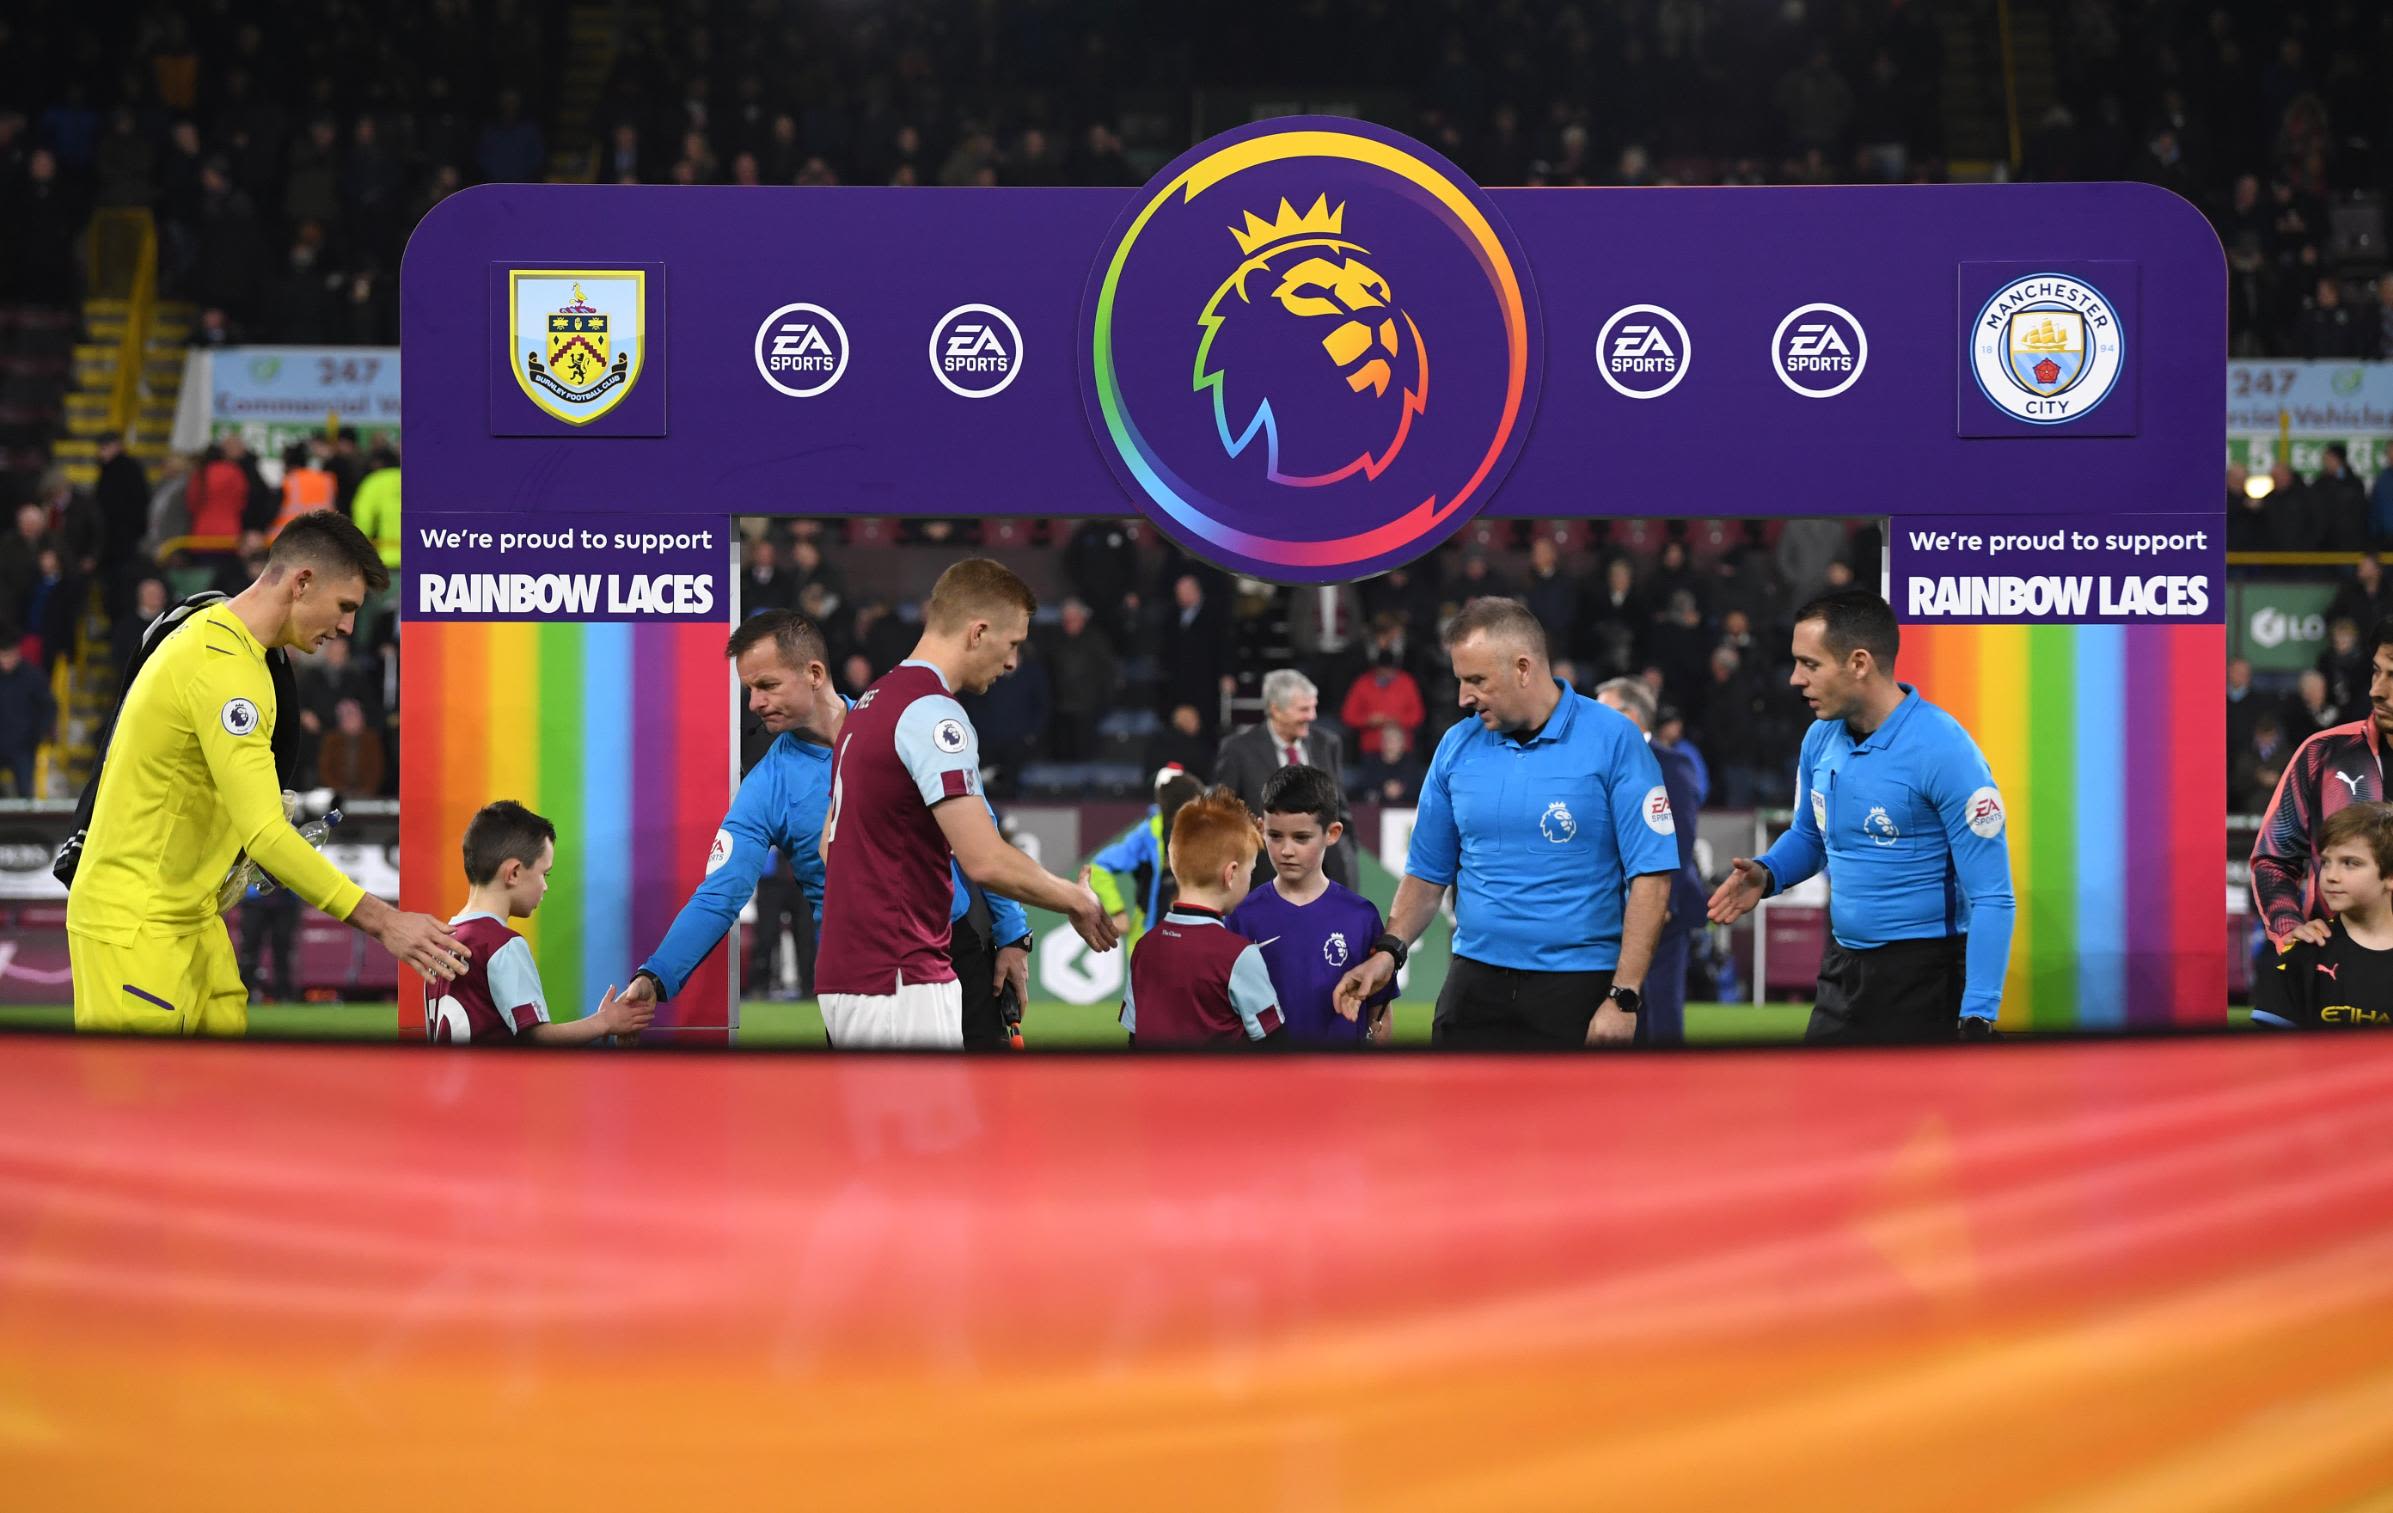 LGBTQ Equality Love LGBT Rainbow Flag Gay Pride Men's Football